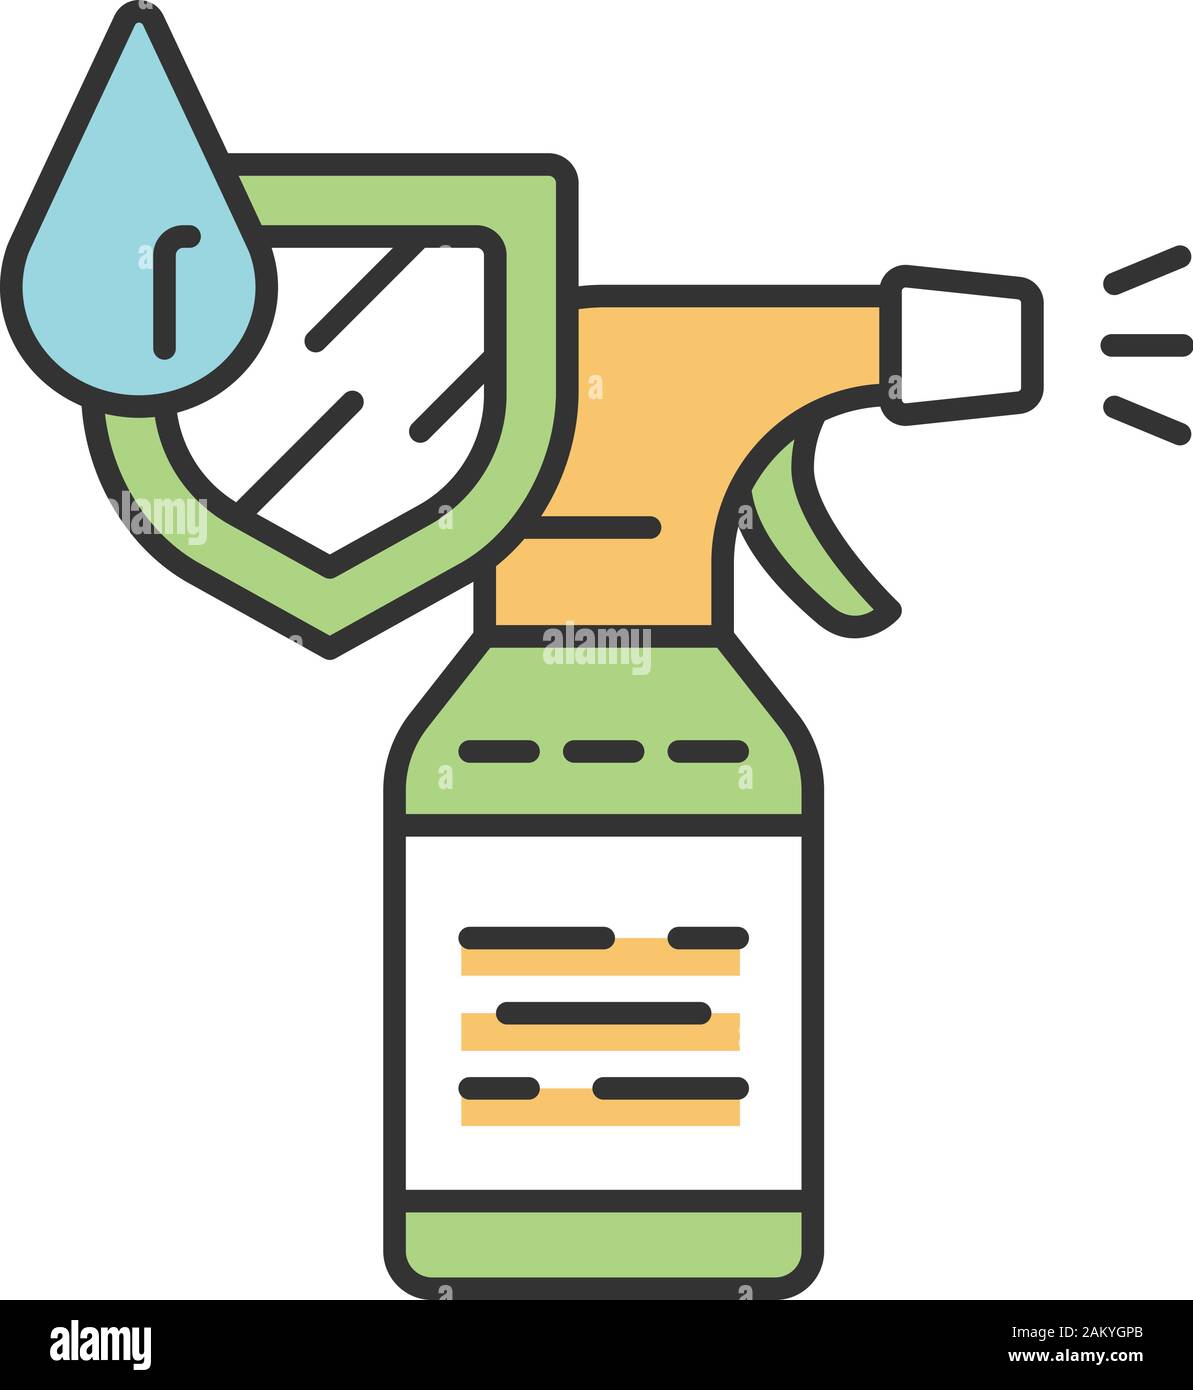 Waterproof spray bottle color icon. Water resistant aerosol